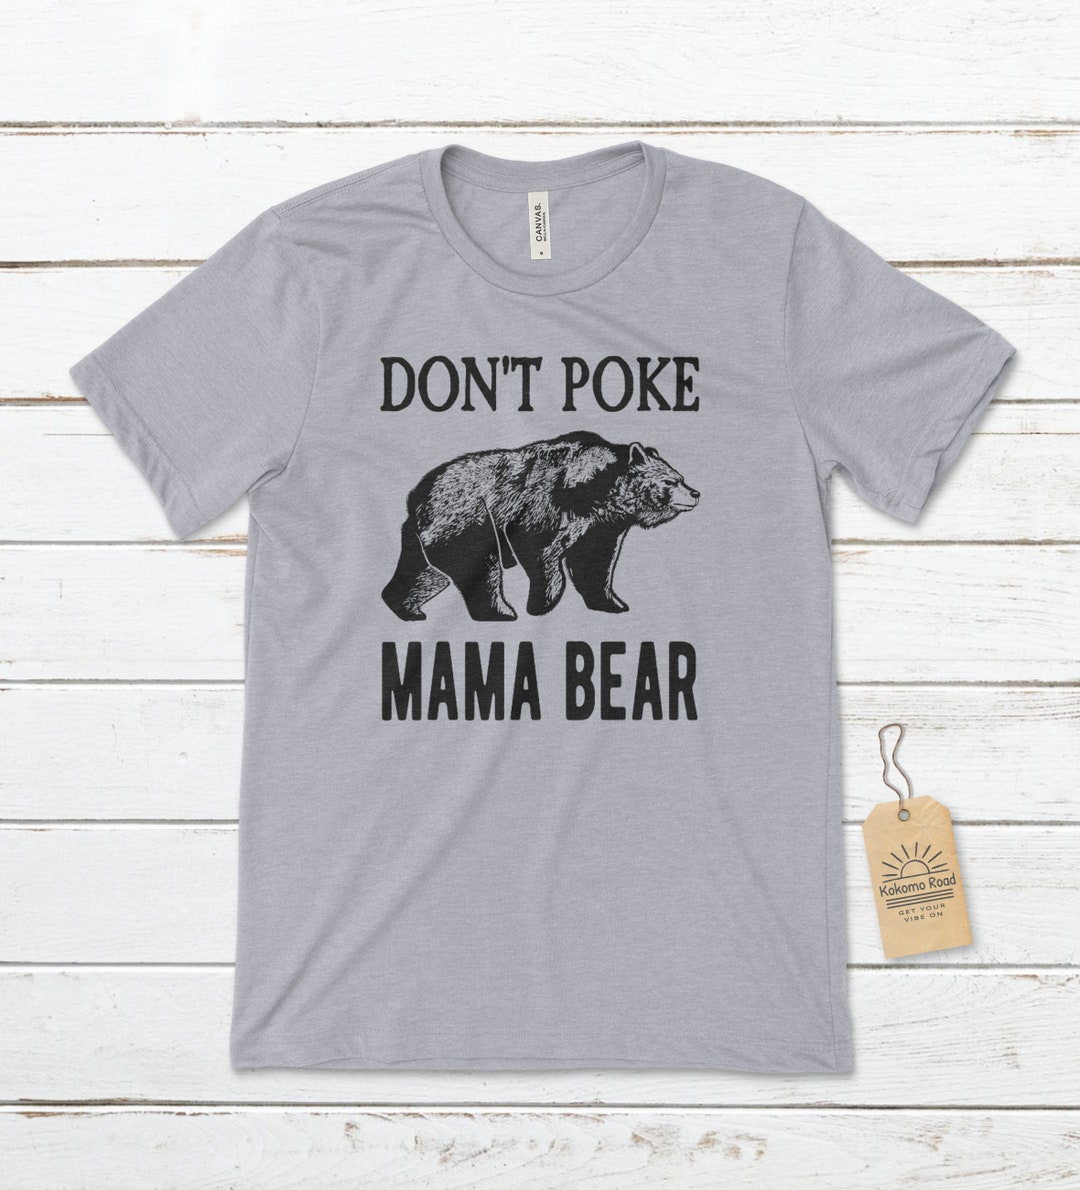 Official Cute Graphic Don't Mess With Mama Bear T-shirt - NVDTeeshirt